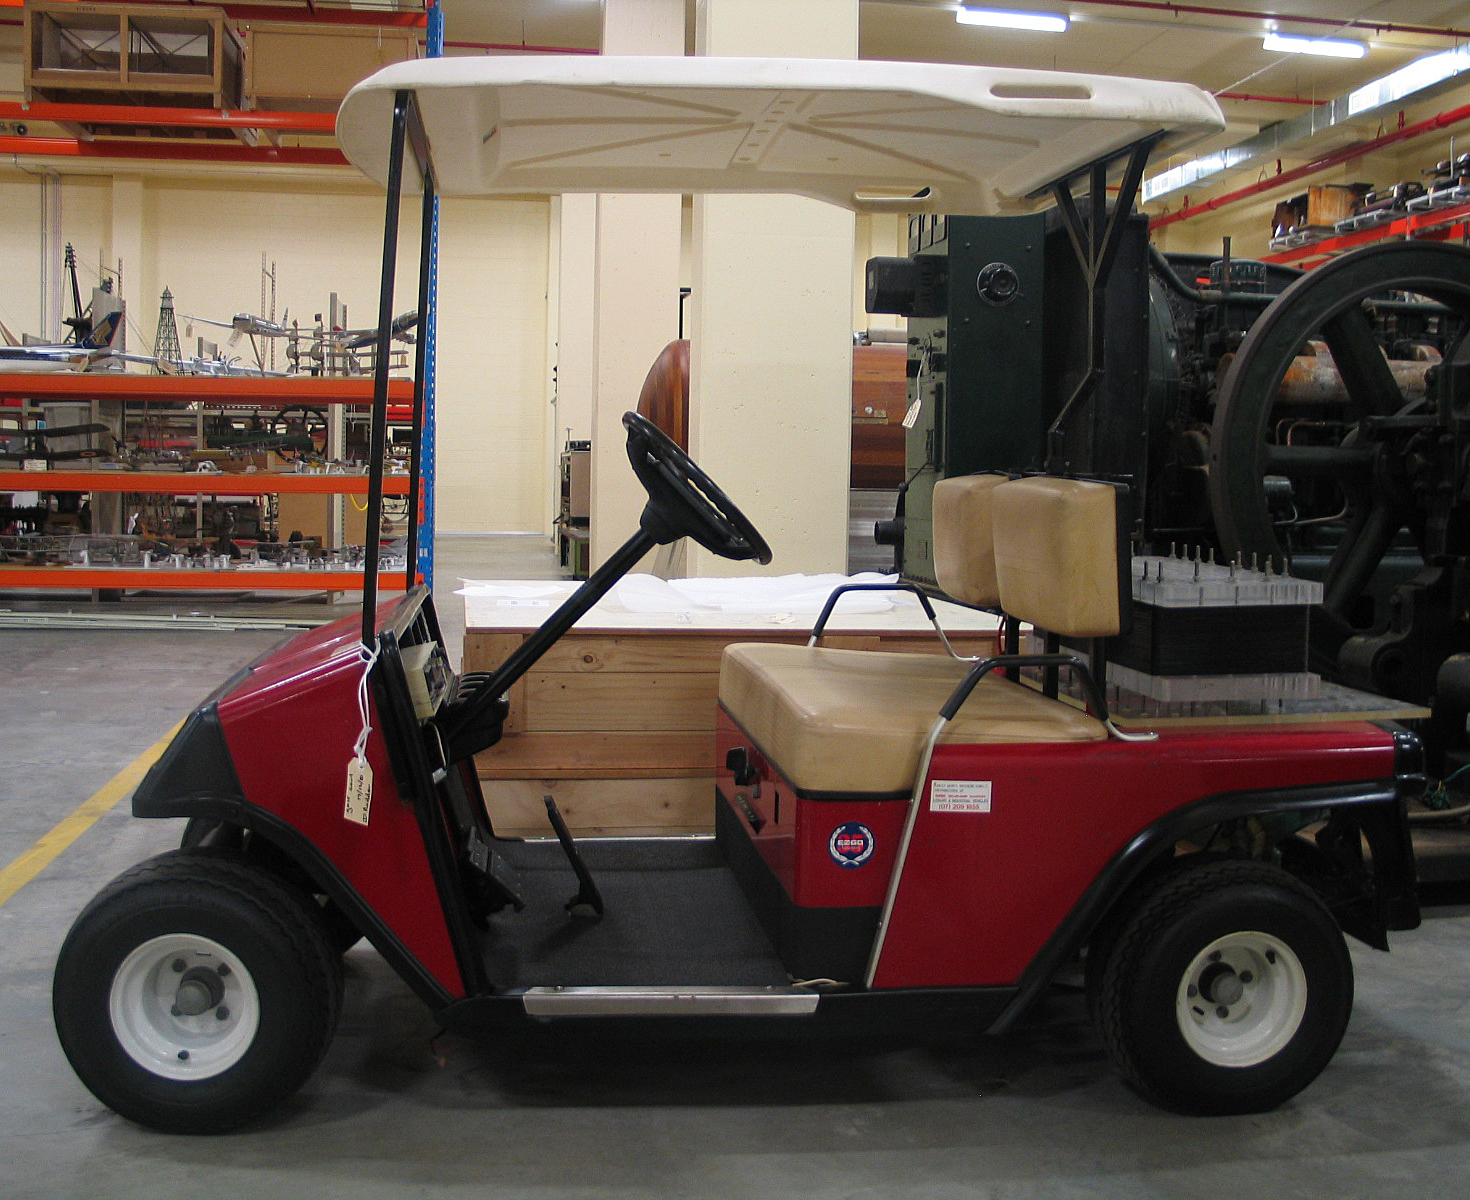 Electric golf cart used in vanadium battery trials